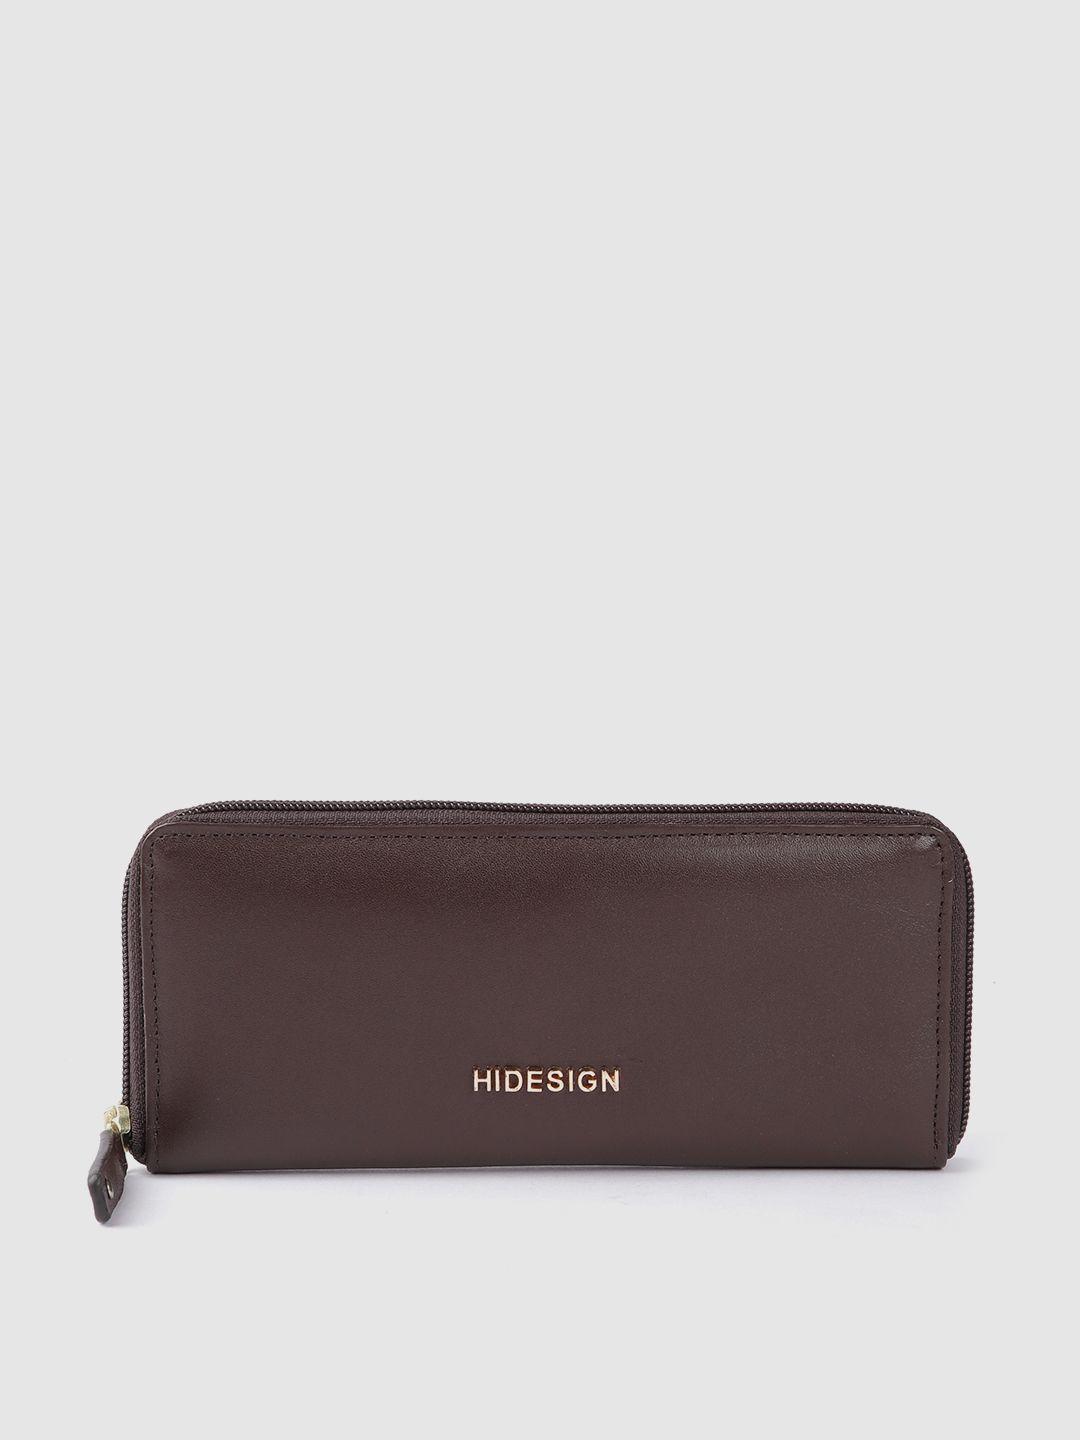 hidesign women leather zip around wallet